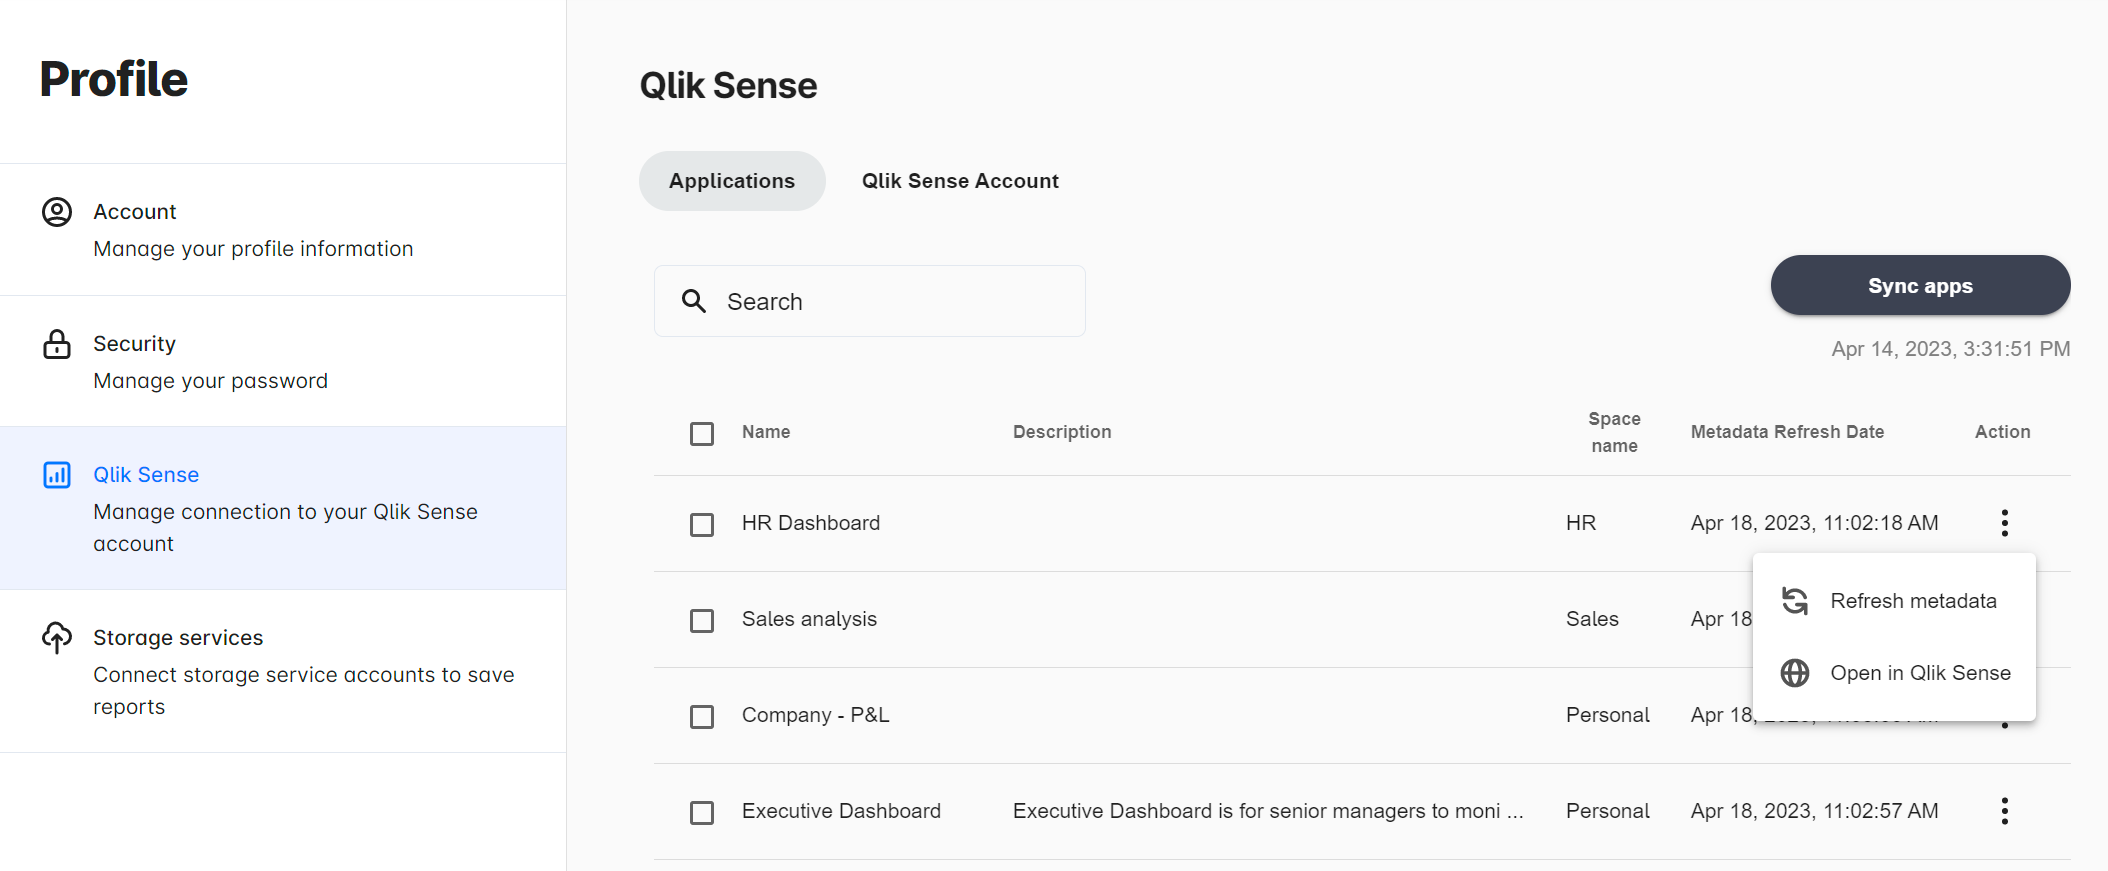 %Qlik Sense Reporting Tool & Alternative to NPrinting%Qalyptus